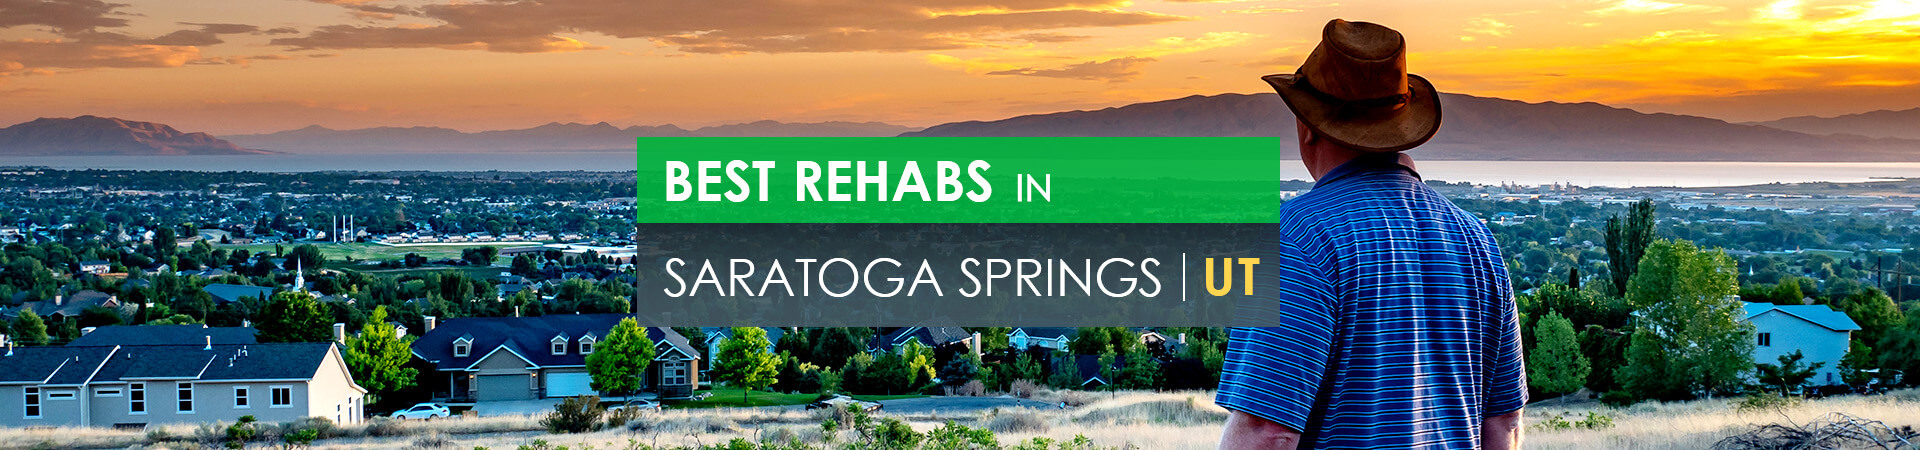 Best rehabs in Saratoga Springs, UT